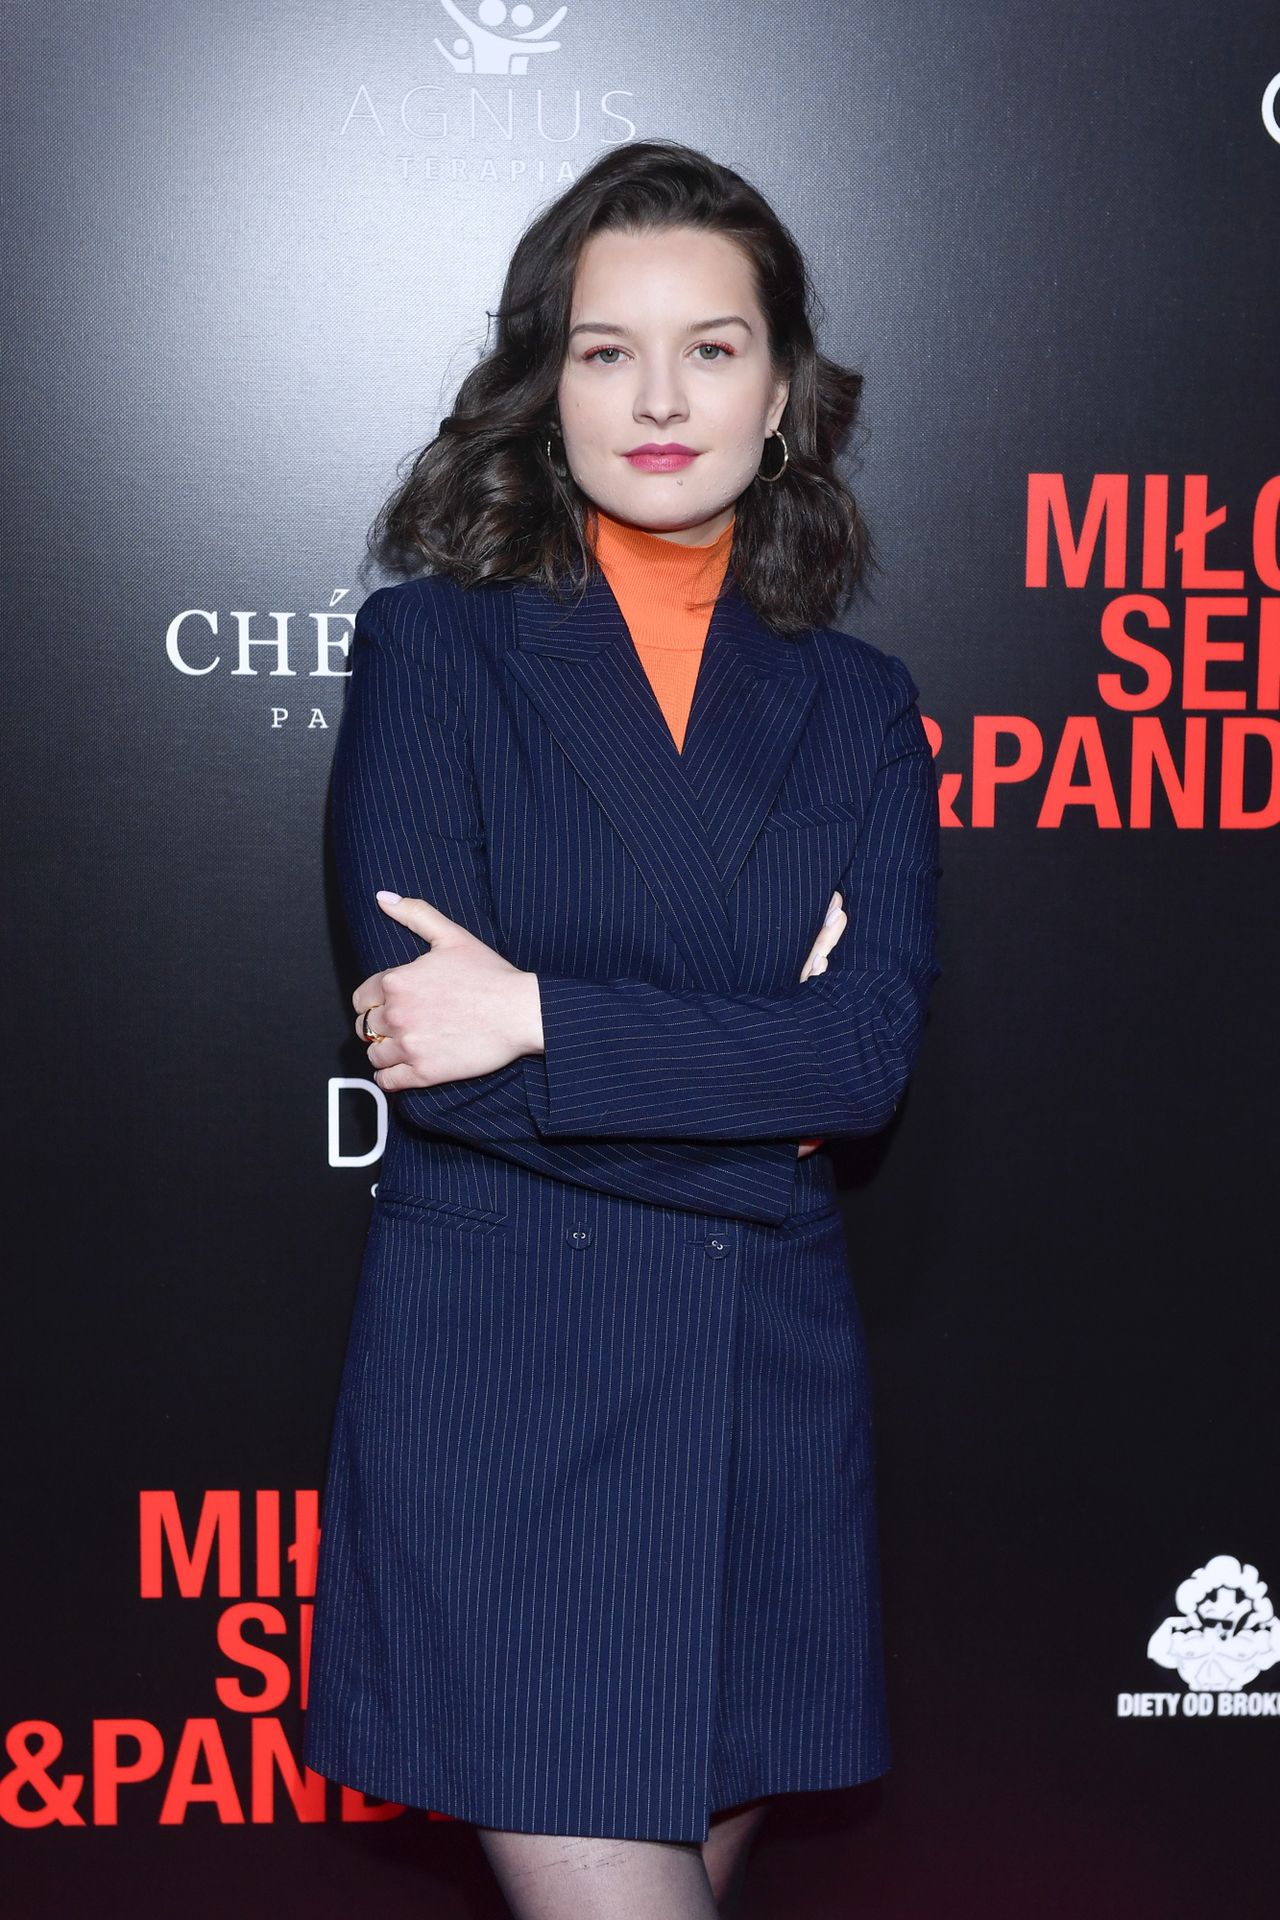 Julia Chatys na premierze filmu "Miłość, seks & pandemia" 